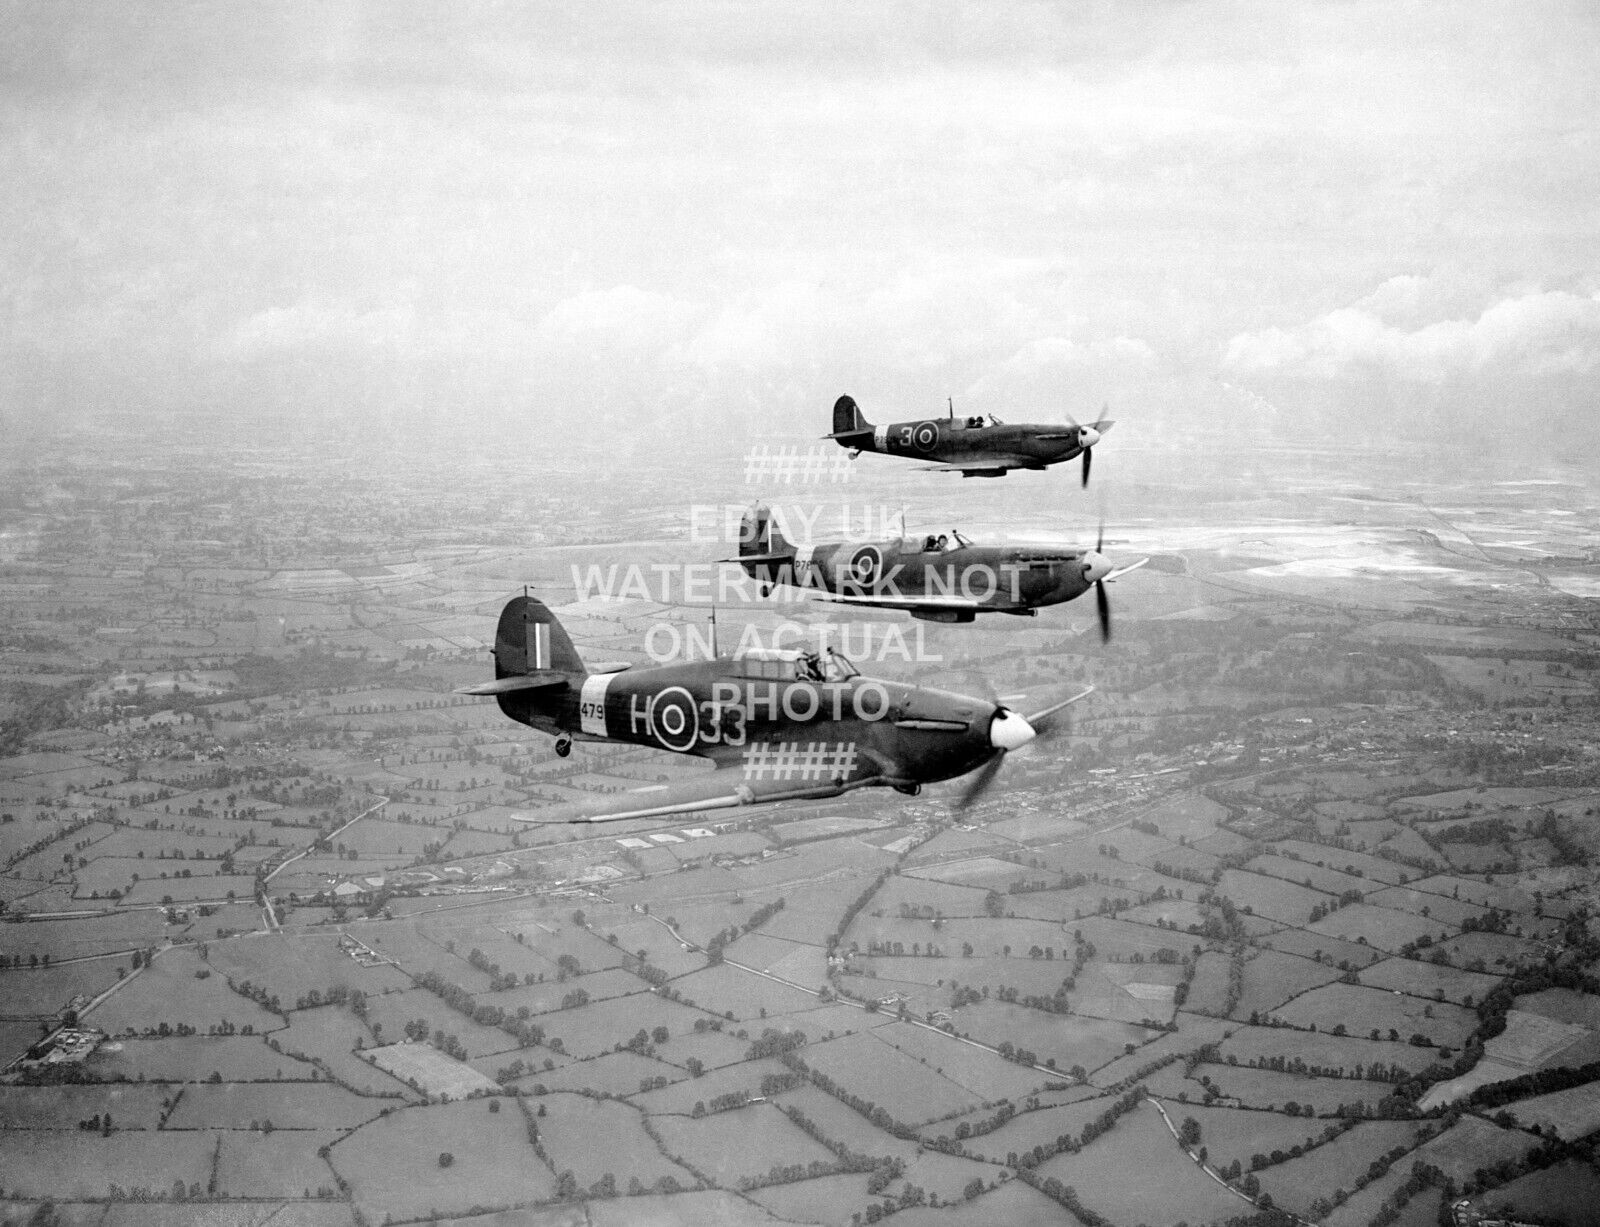 1942 HAWKER HURRICANE SPITFIRE PHOTO WORLD WAR TWO 2 WW2 AVIATION RAF AIRCRAFT